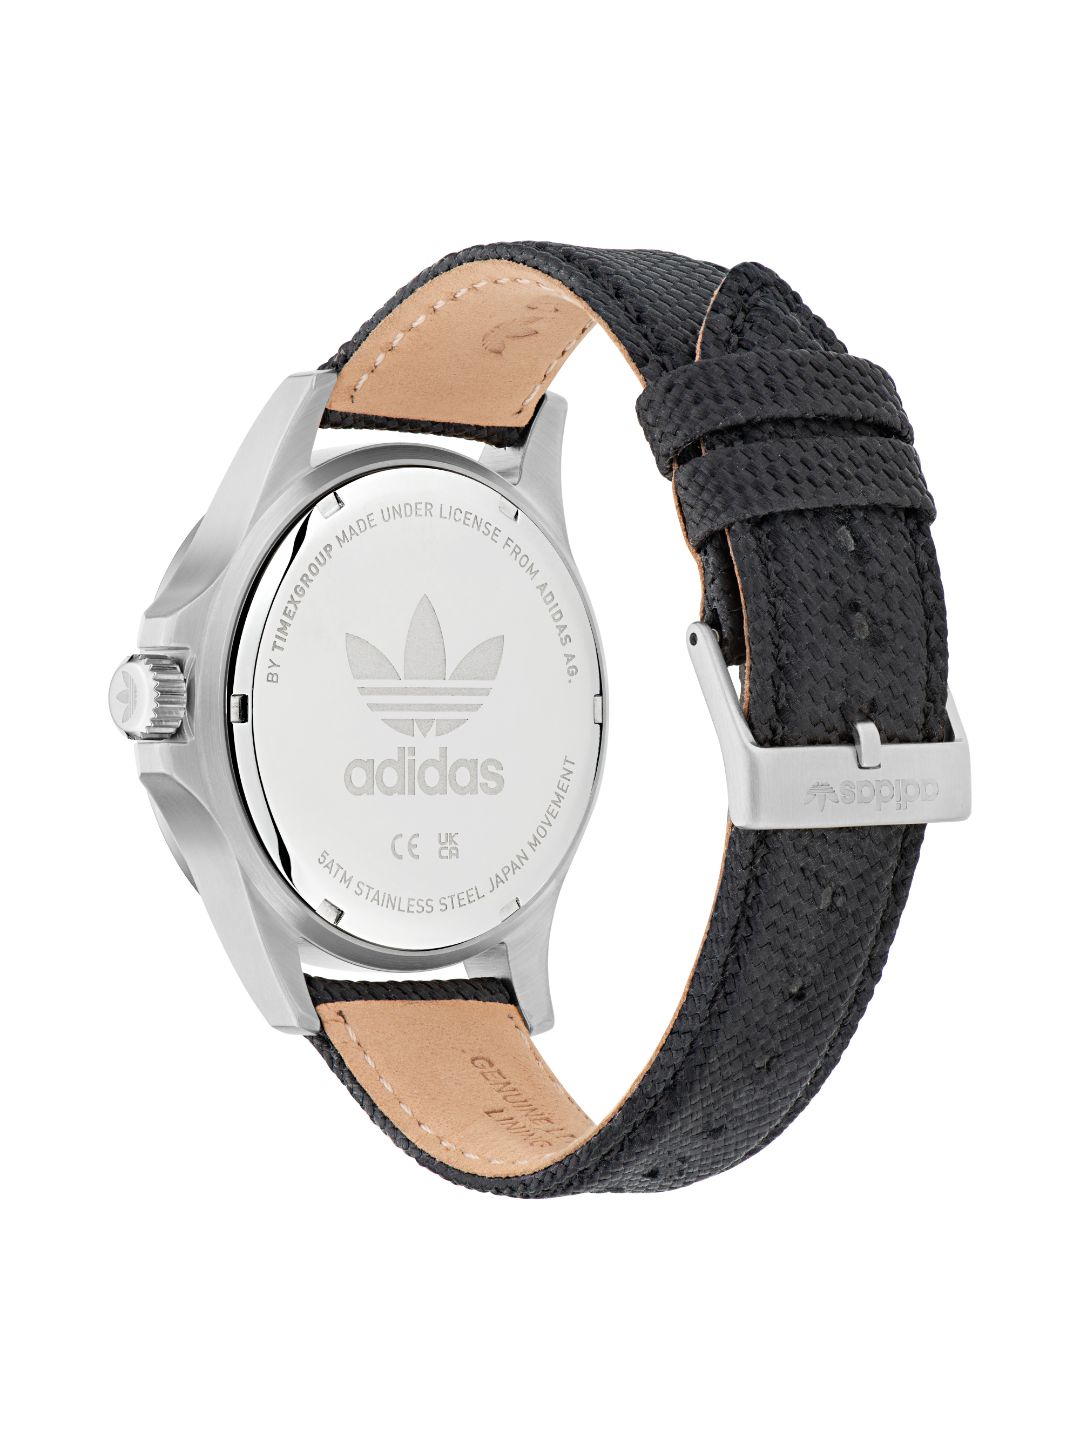 Adidas Originals Black Dial Unisex Watch - AOFH23016